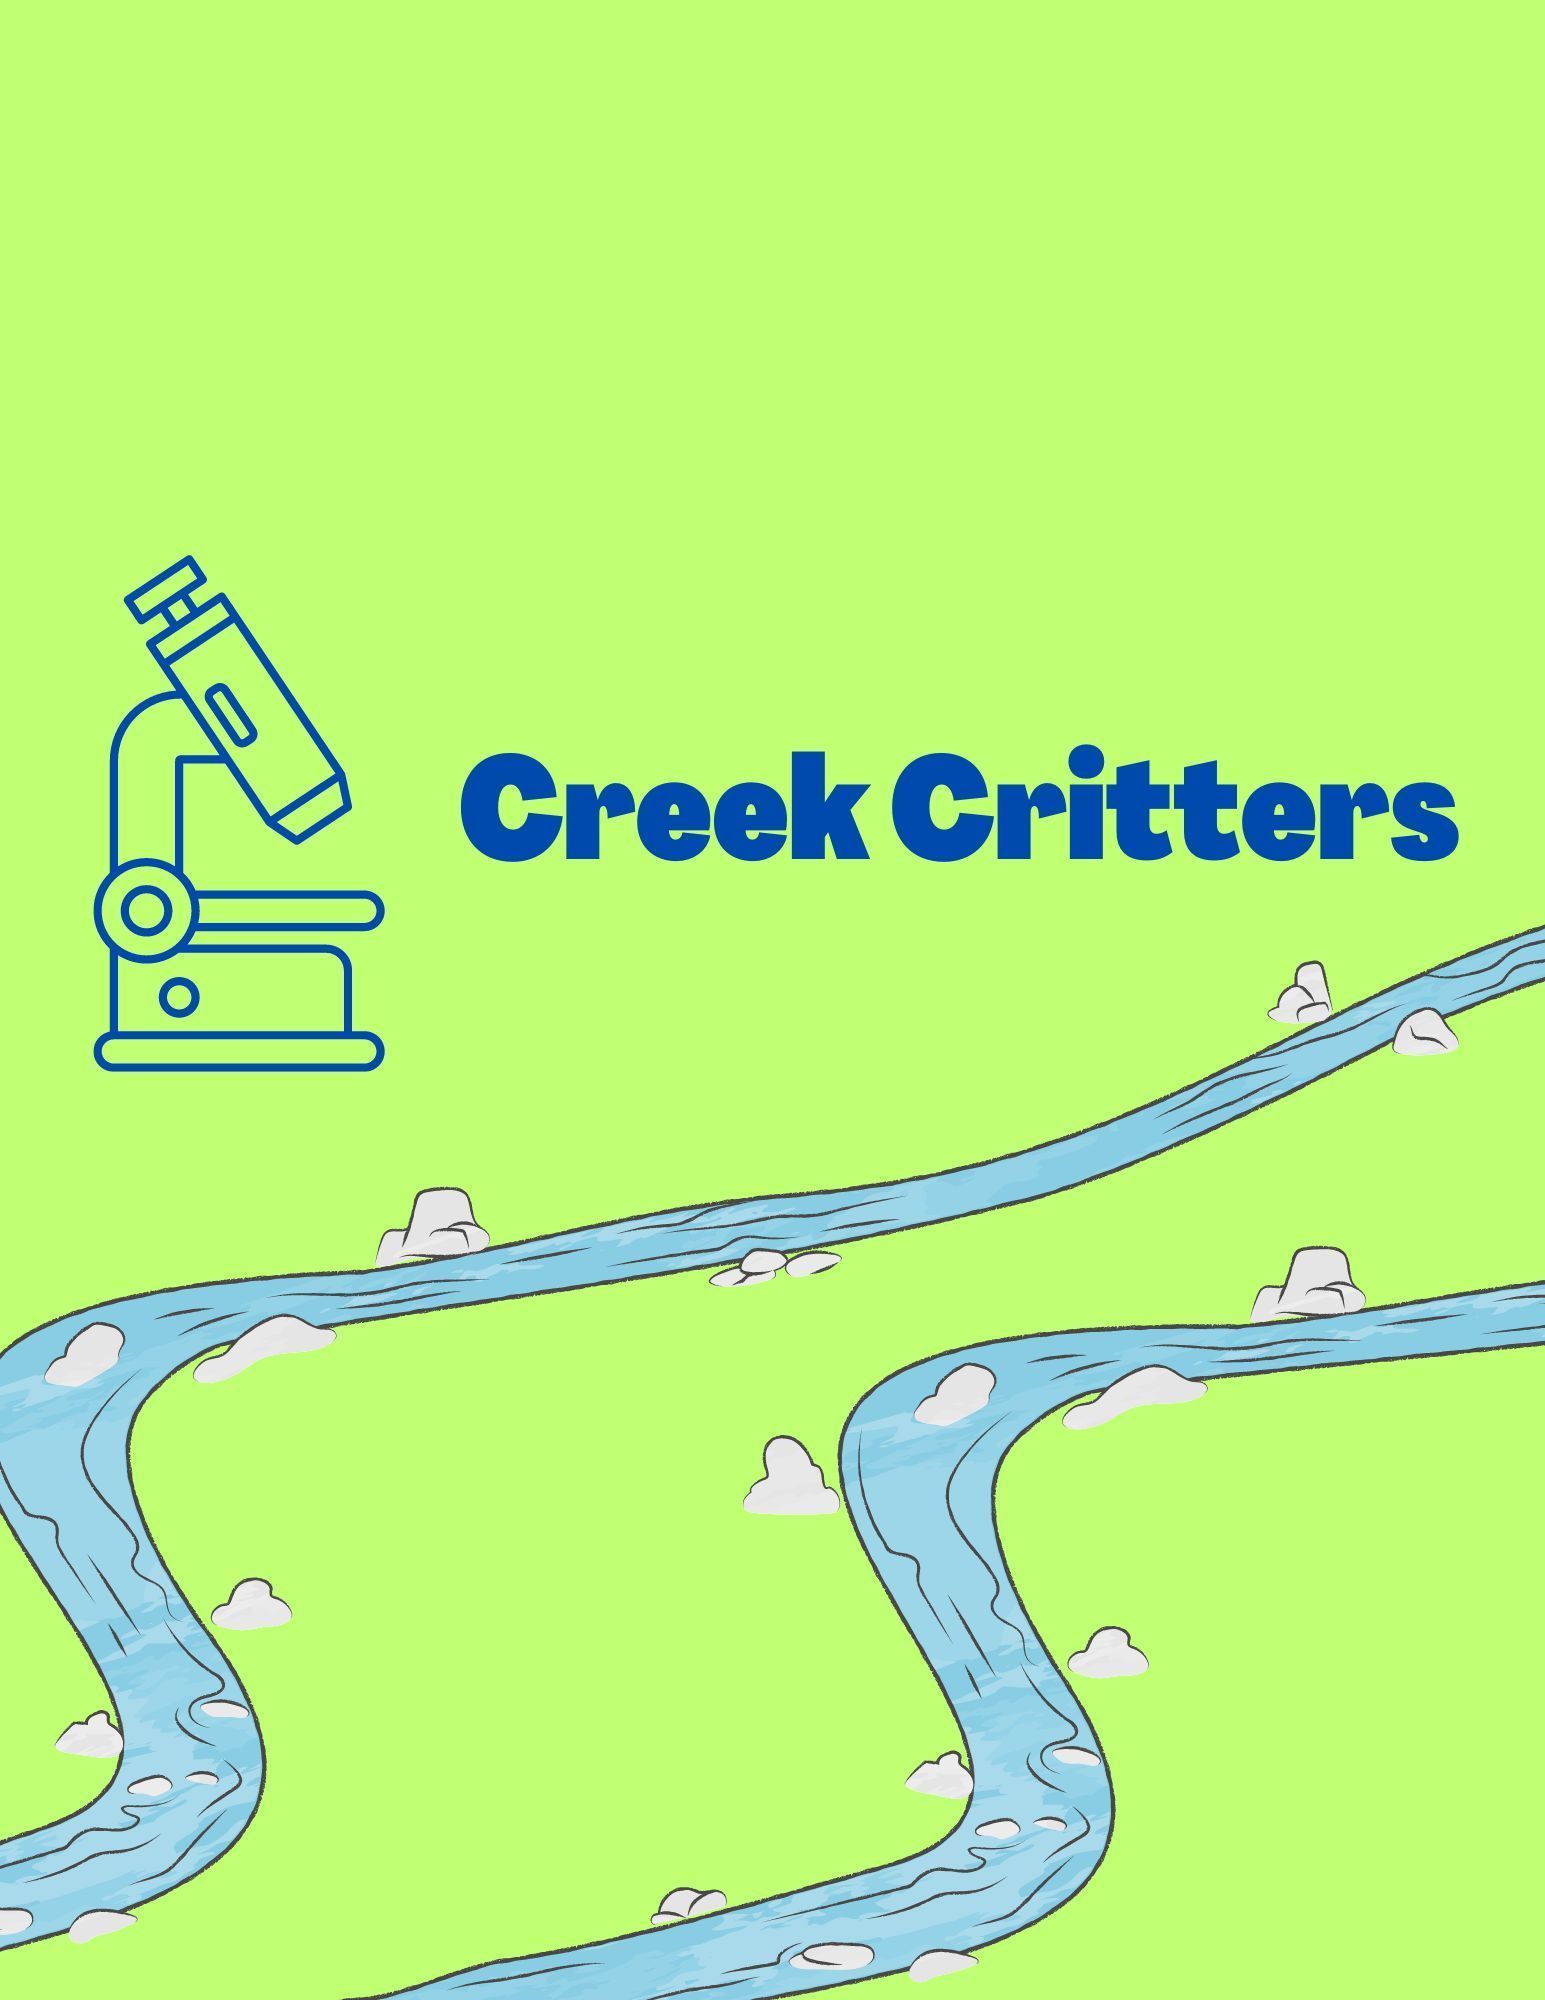 creek cartoon with microscope image flyer